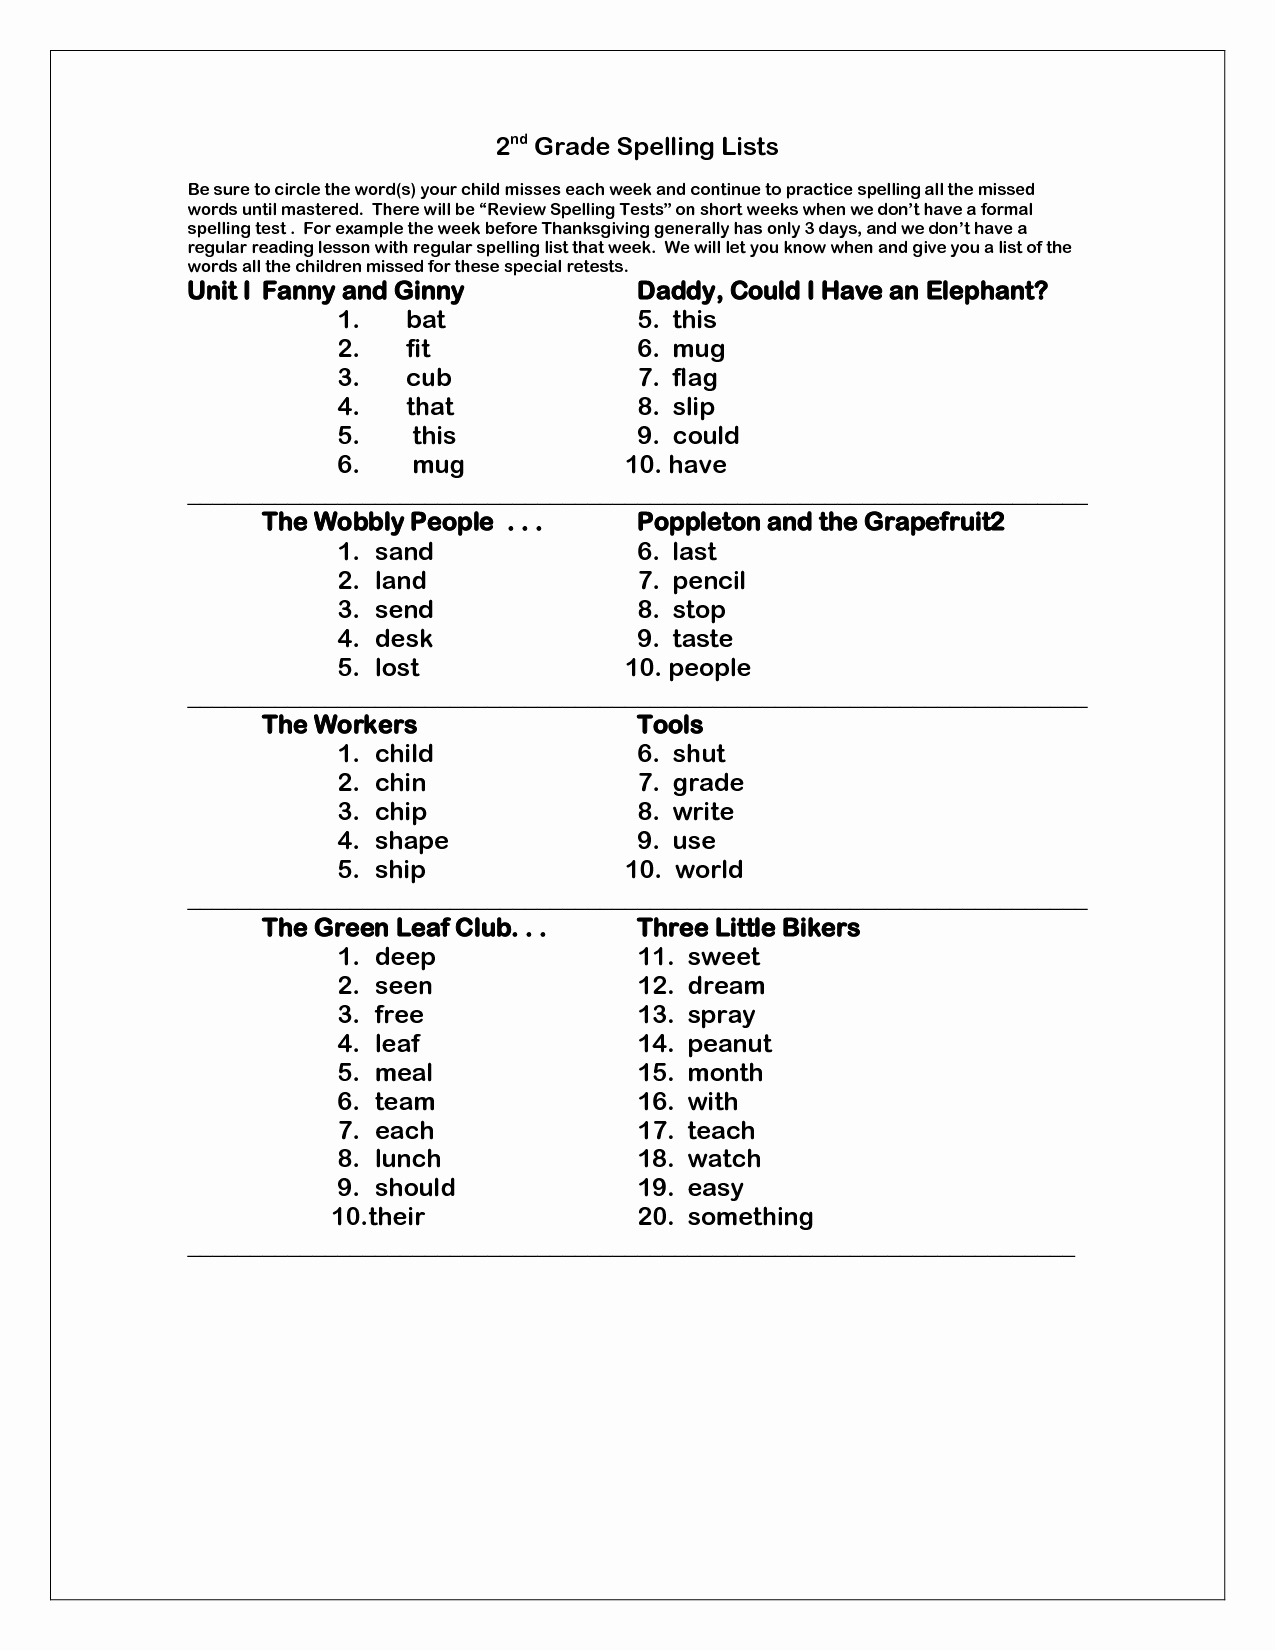 2nd Grade Spelling Worksheets Lovely 2nd Grade Spelling Worksheets to Printable 2nd Grade